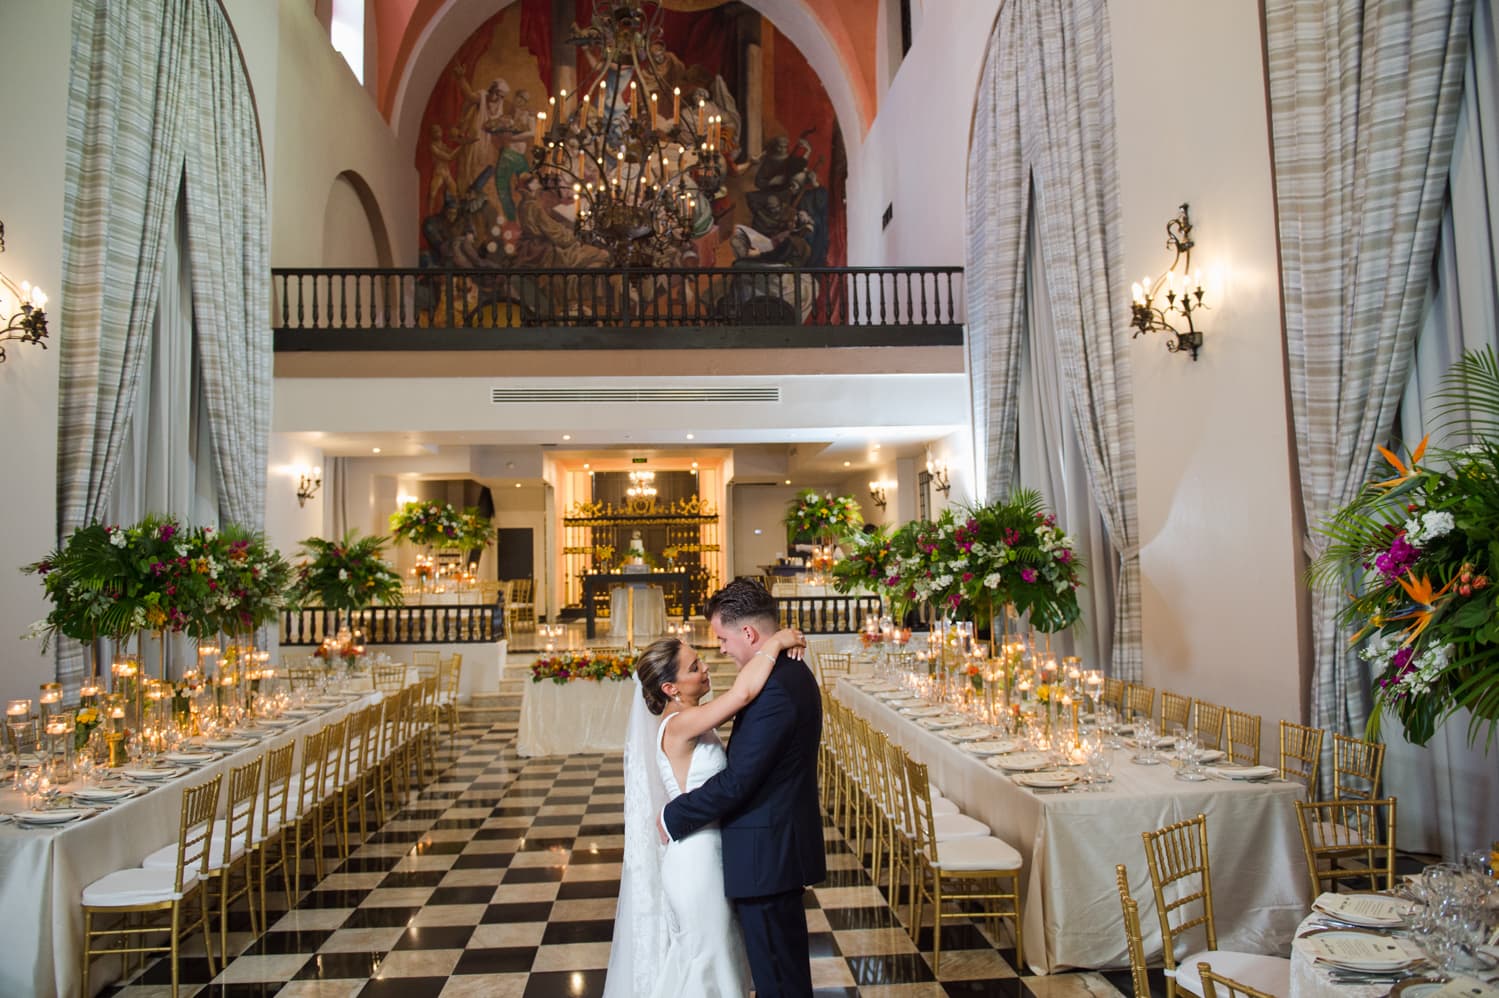 Puerto Rico wedding photographer Camille Fontanez shares a destination wedding at Hotel El Convento in Old San Juan